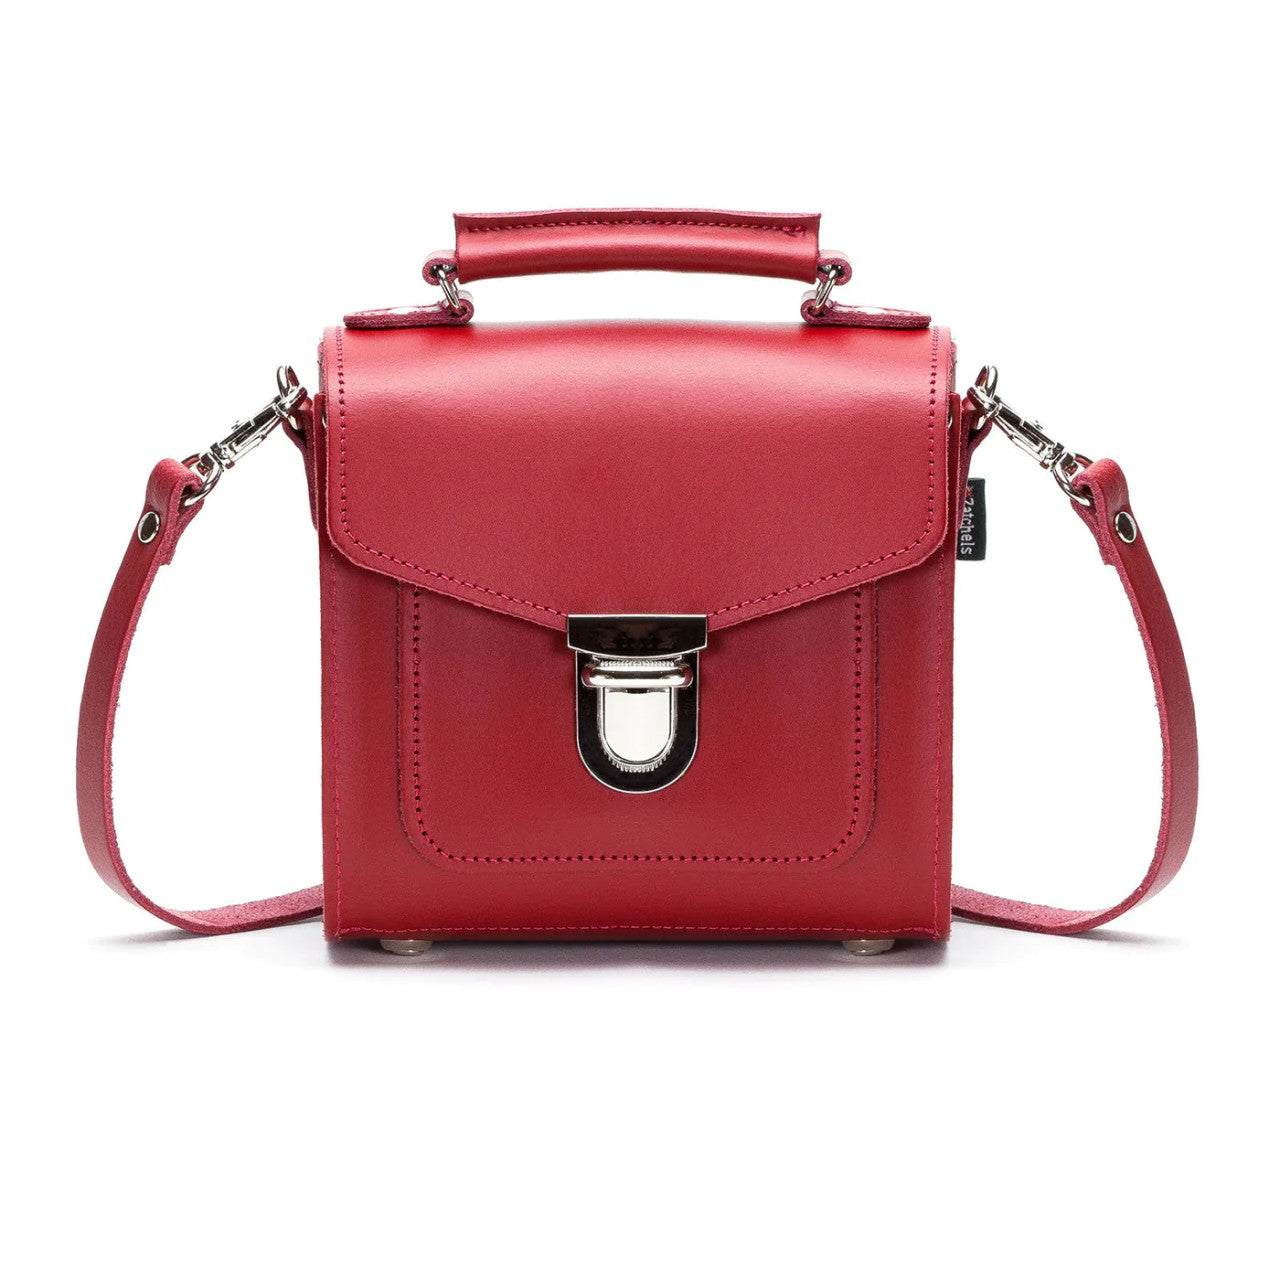 Handmade Leather Sugarcube Plus Handbag in Red by Zatchels.